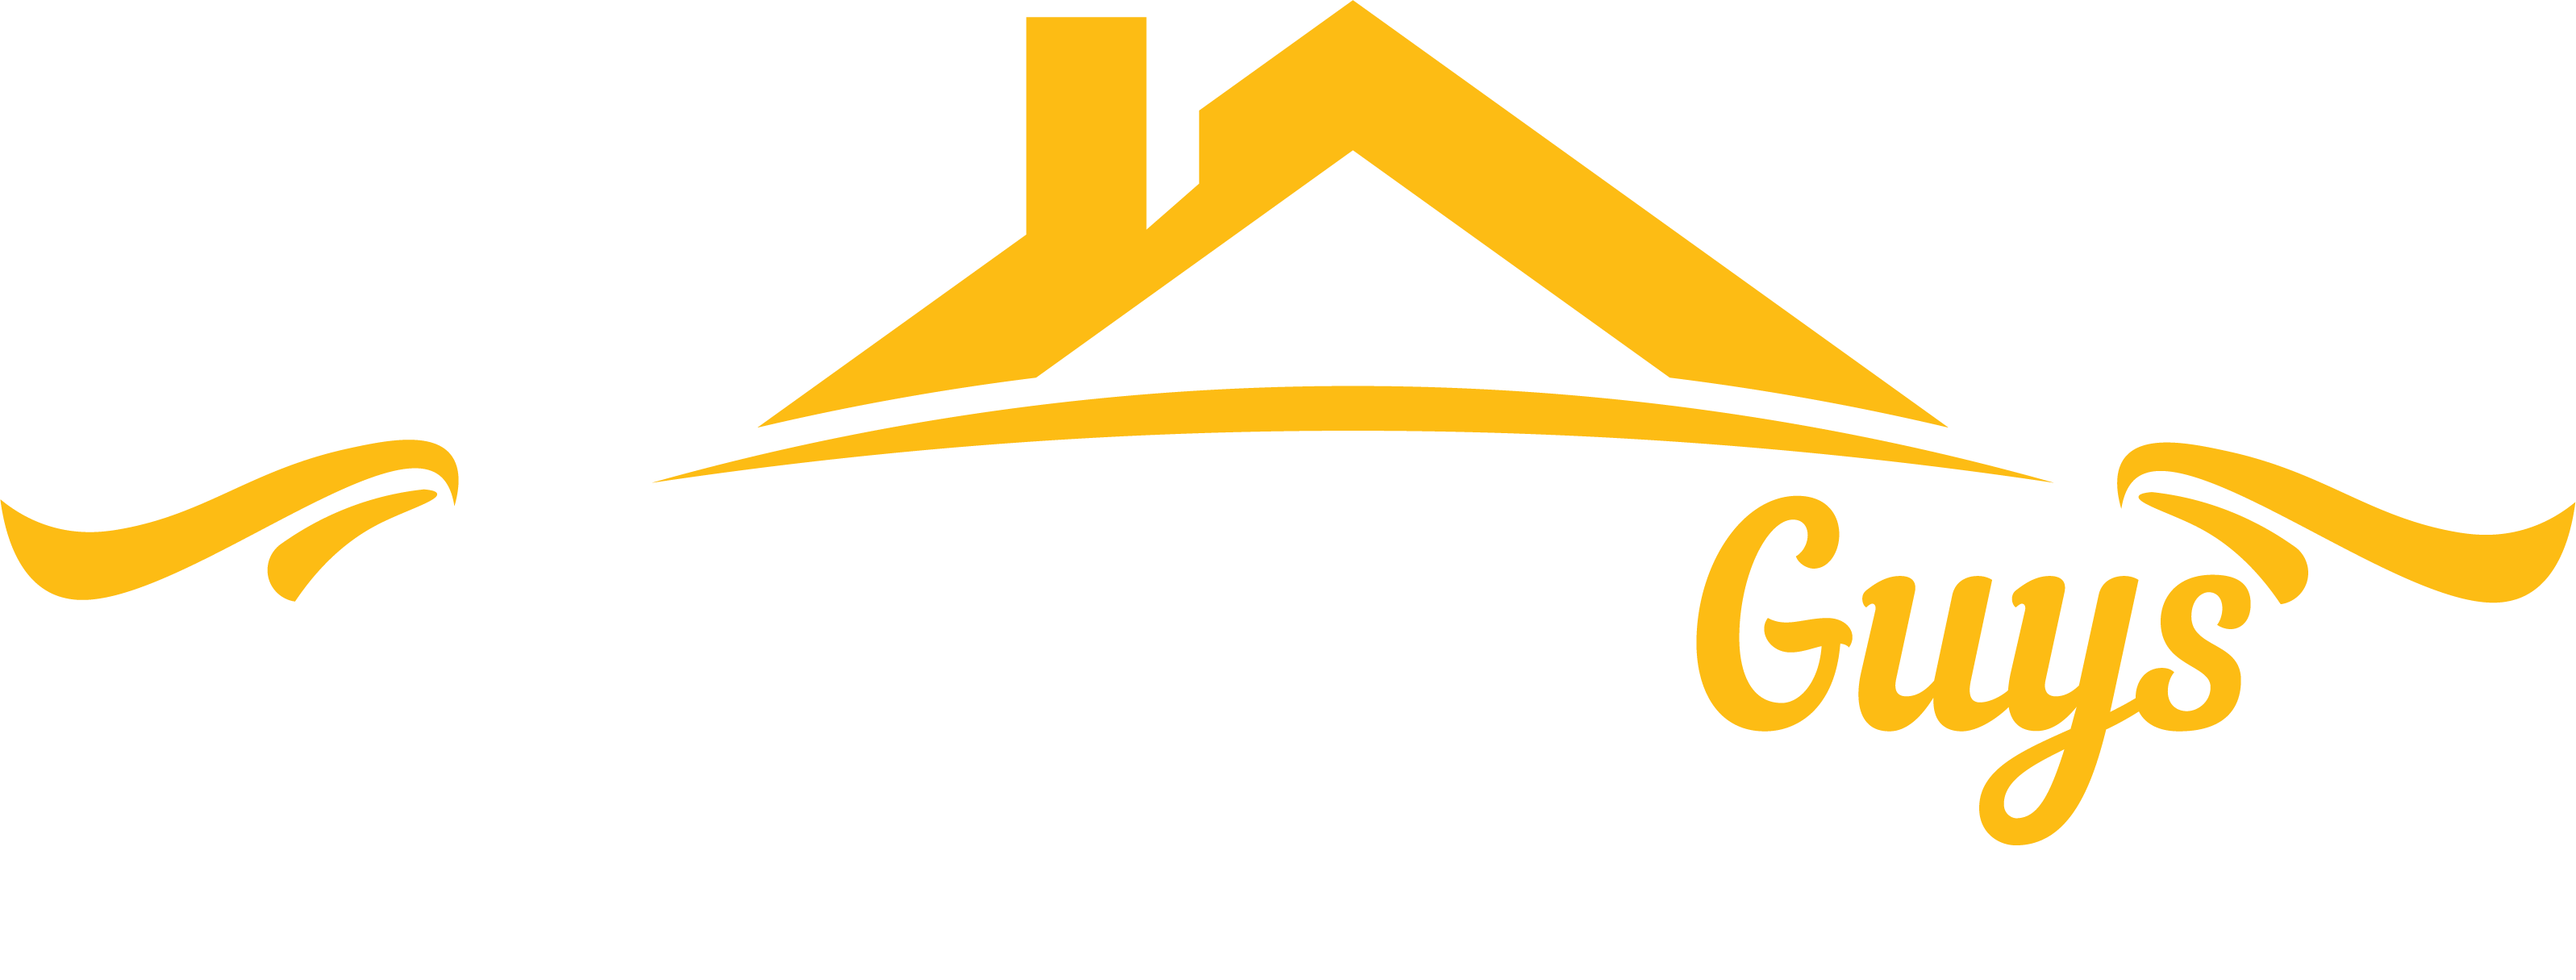 cedar roof repair, maintenance, glenview, il, chicago suburbs, cedar roof guys, logo